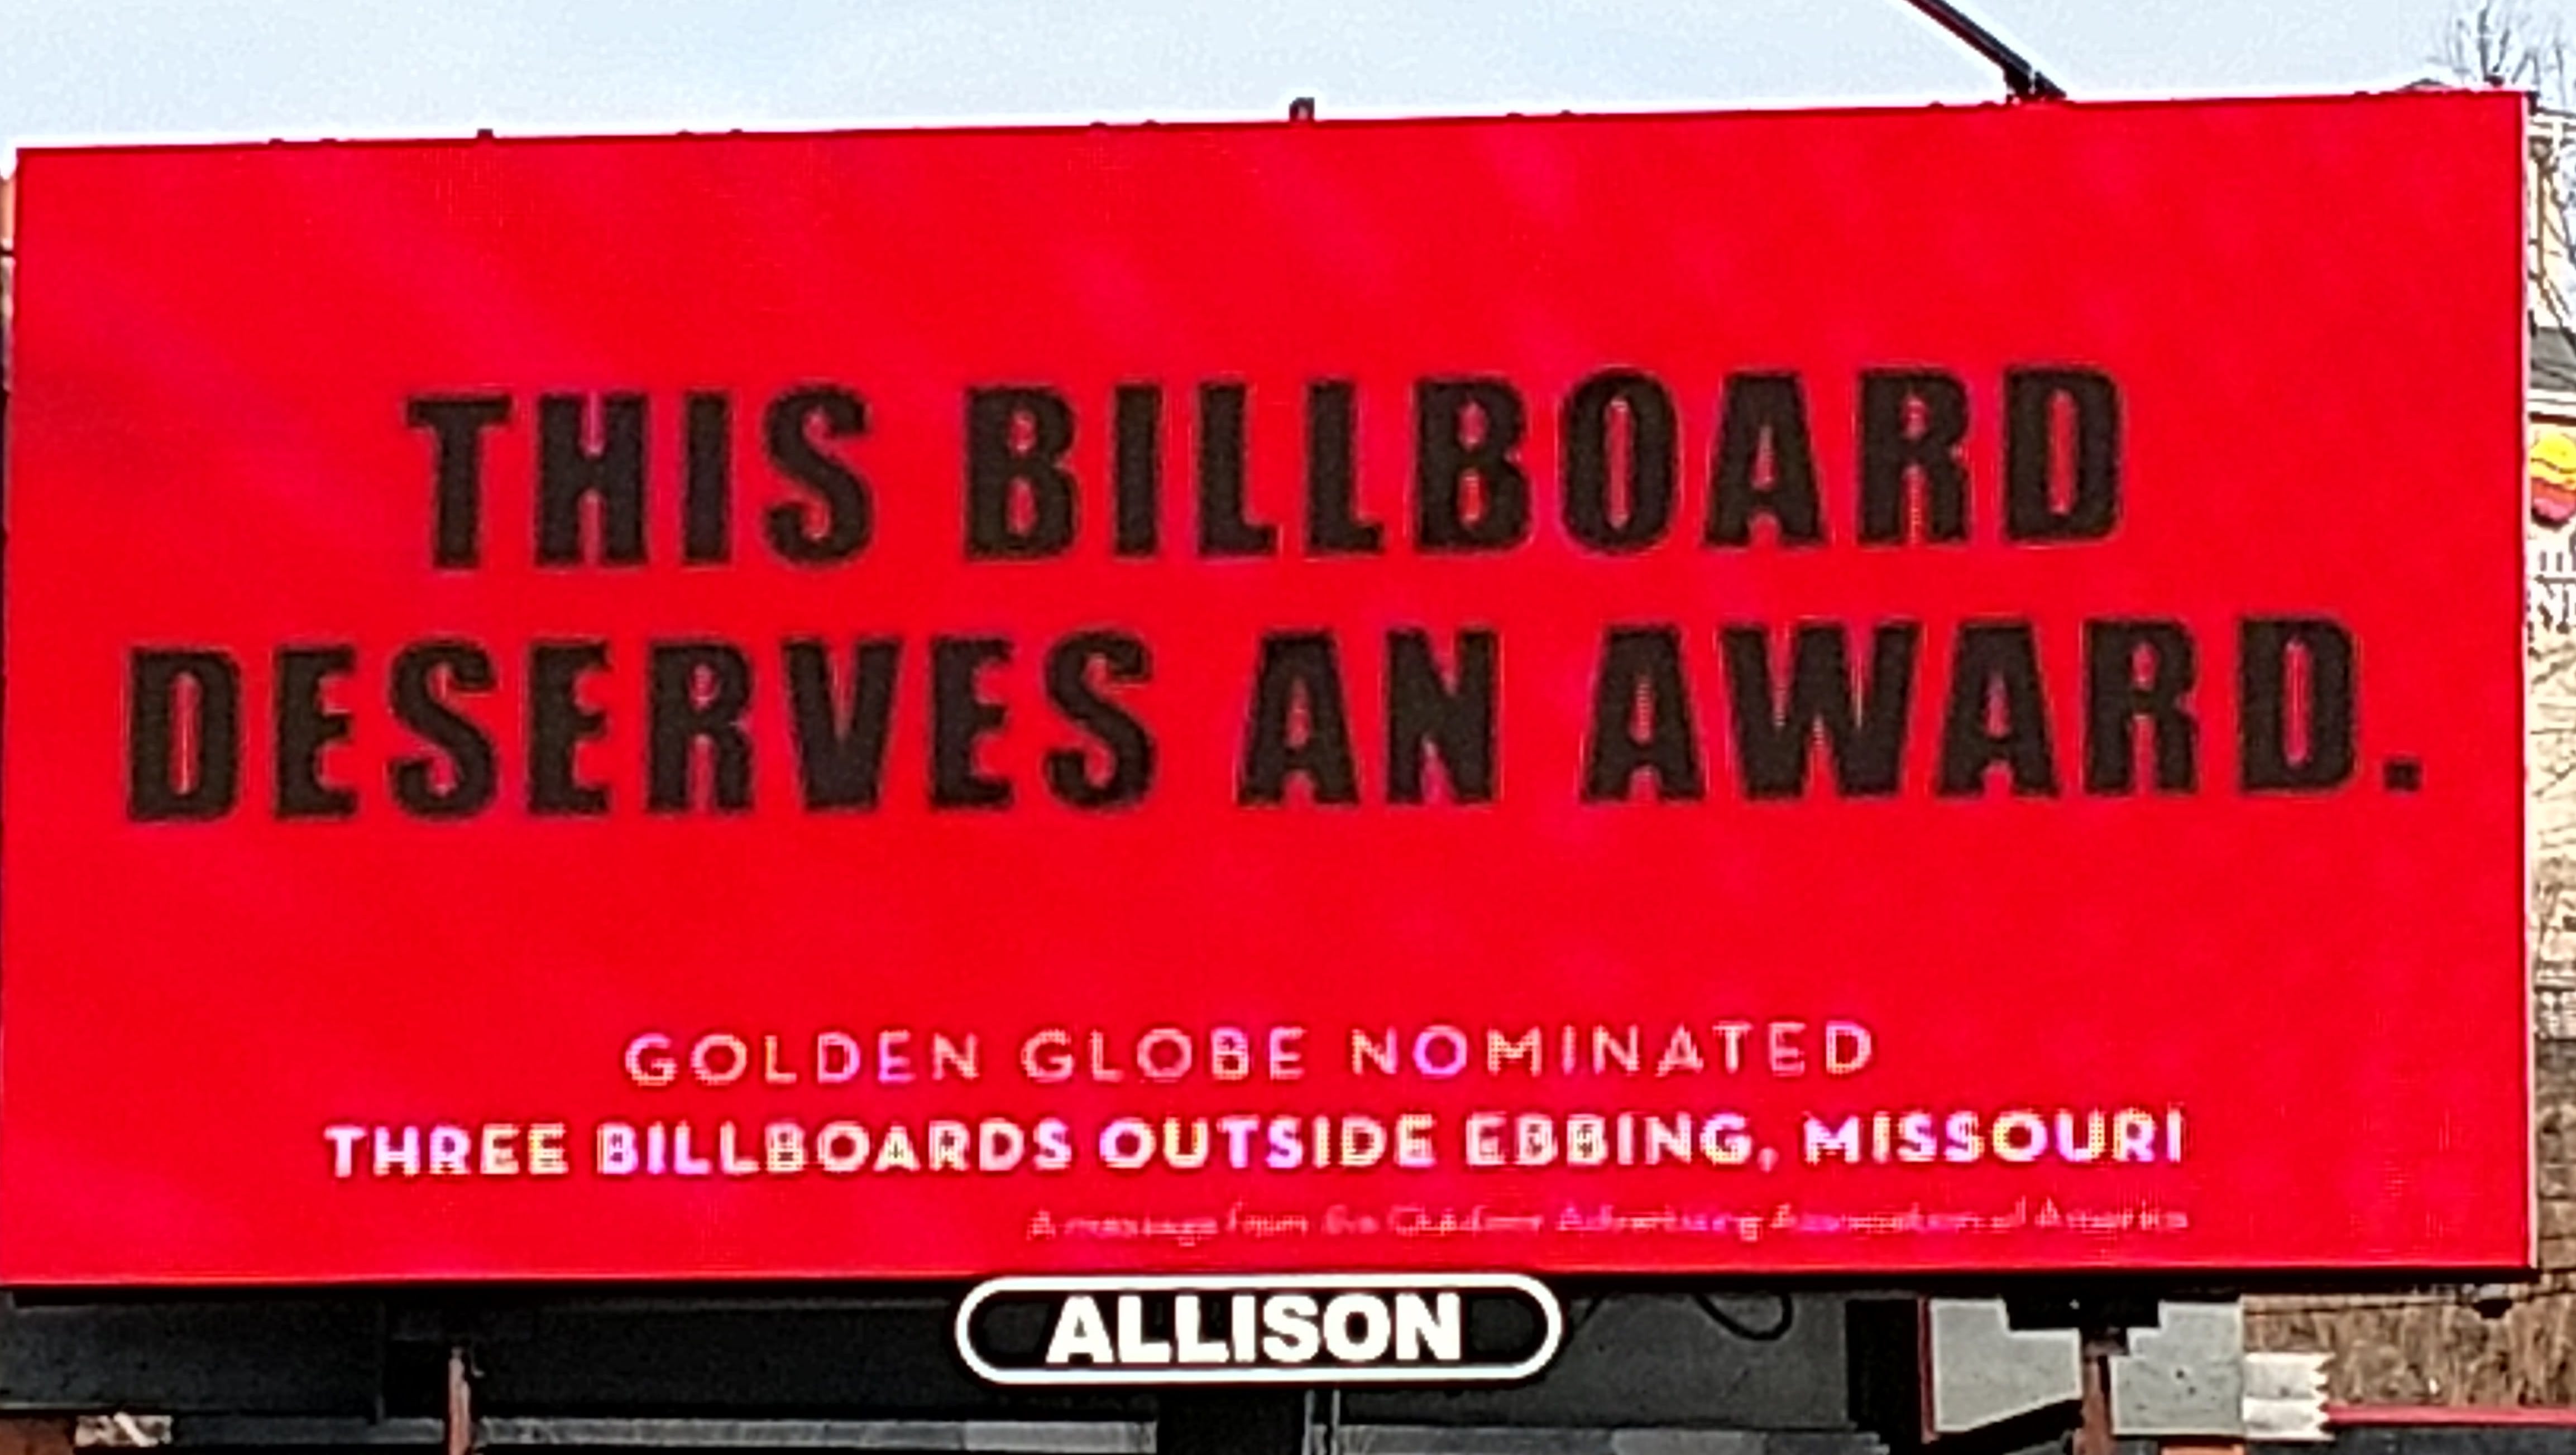 where was three billboards filmed